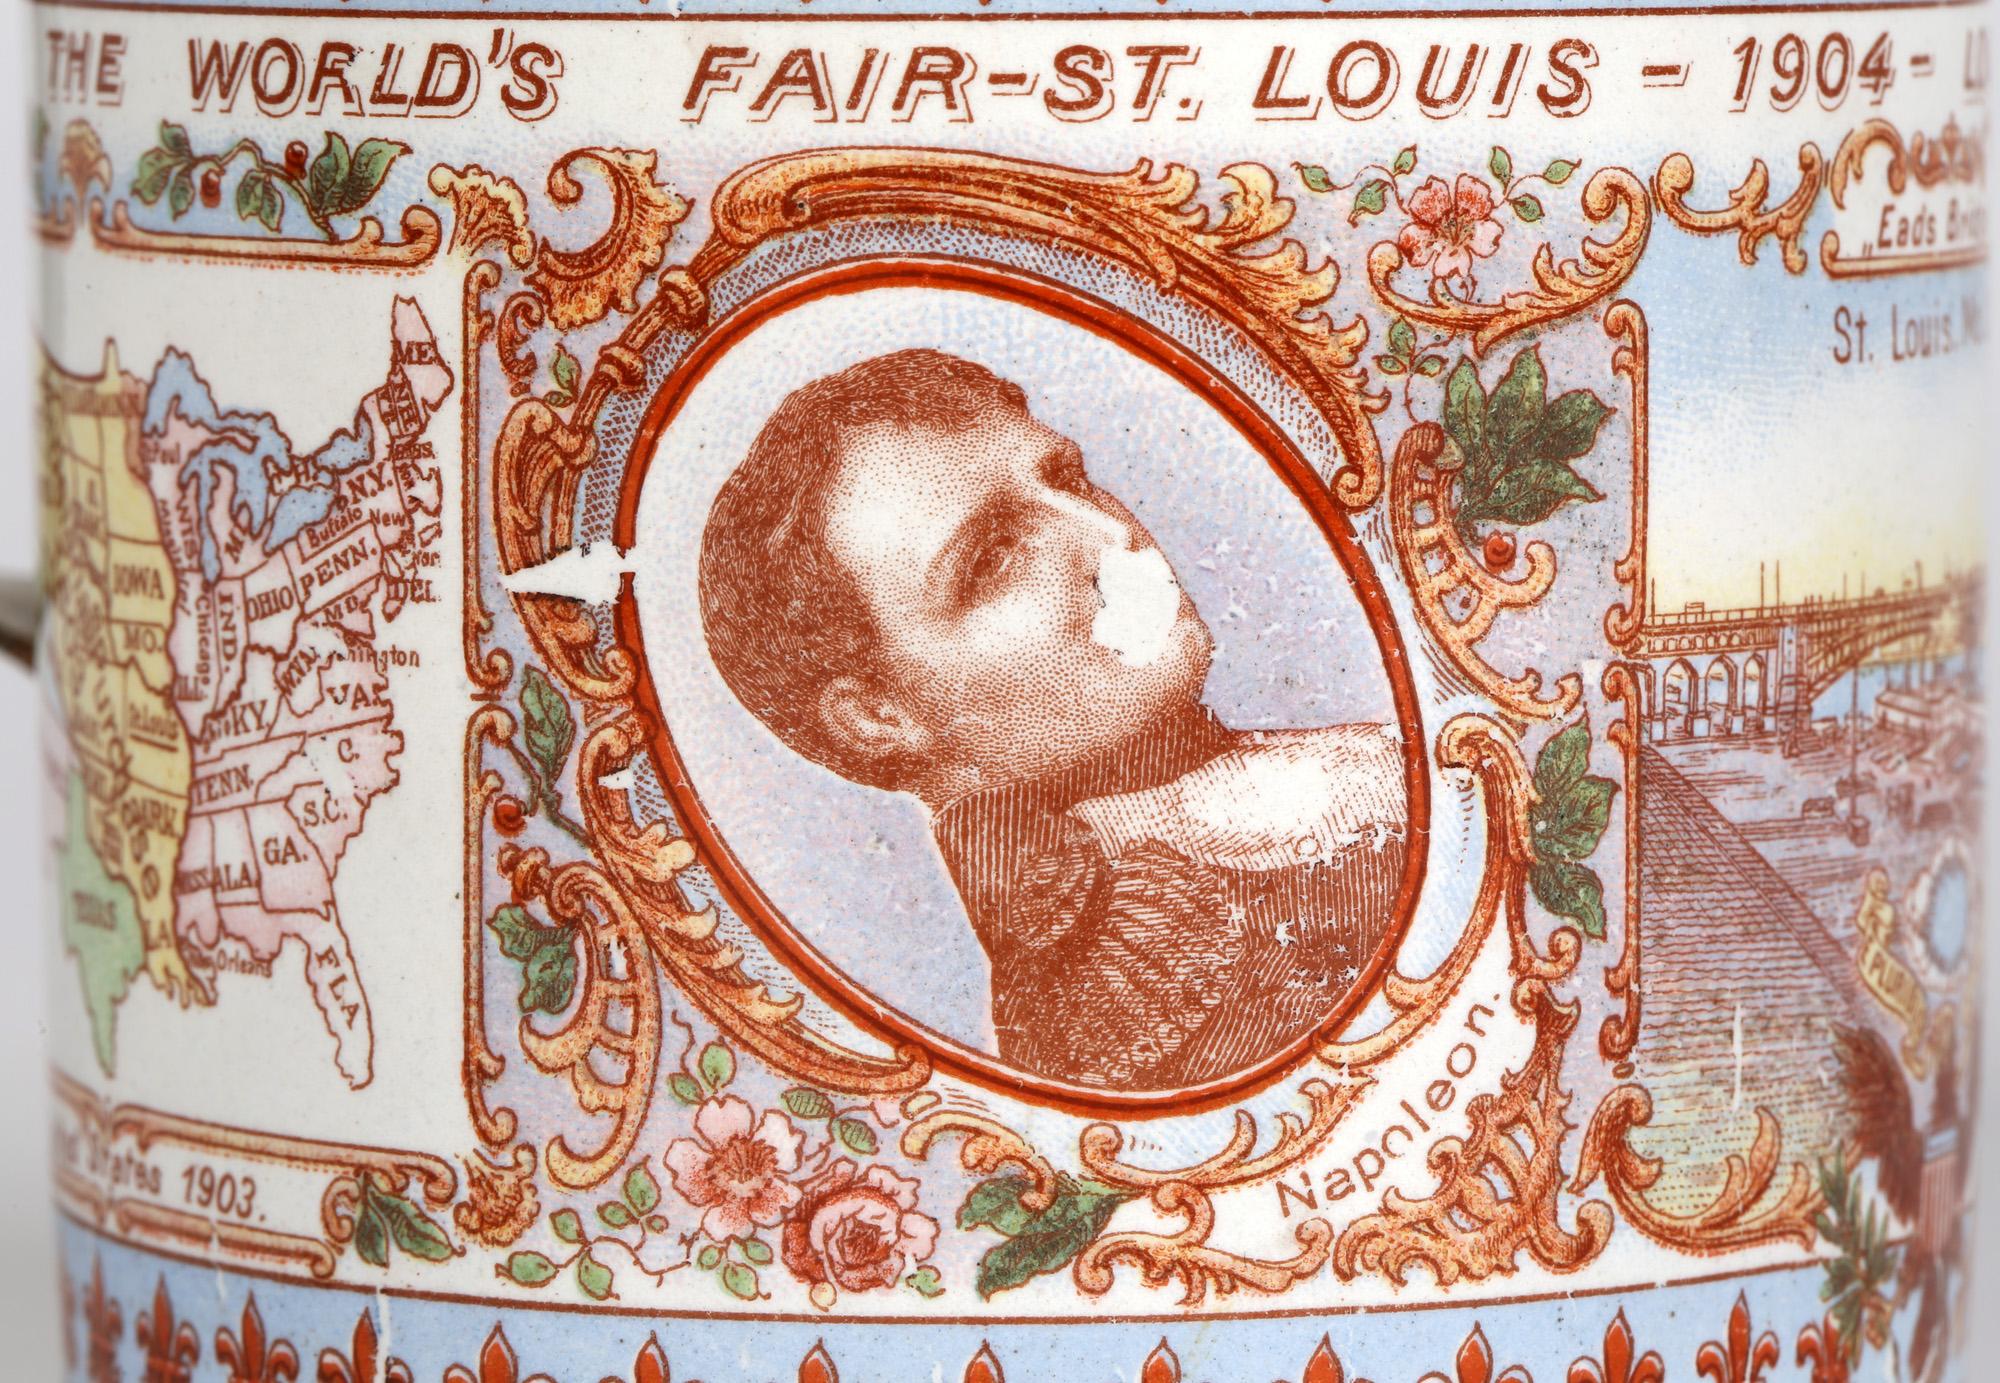 Early 20th Century Louisiana Purchase Exposition World's Fair Enamel Cup St Louis, 1904